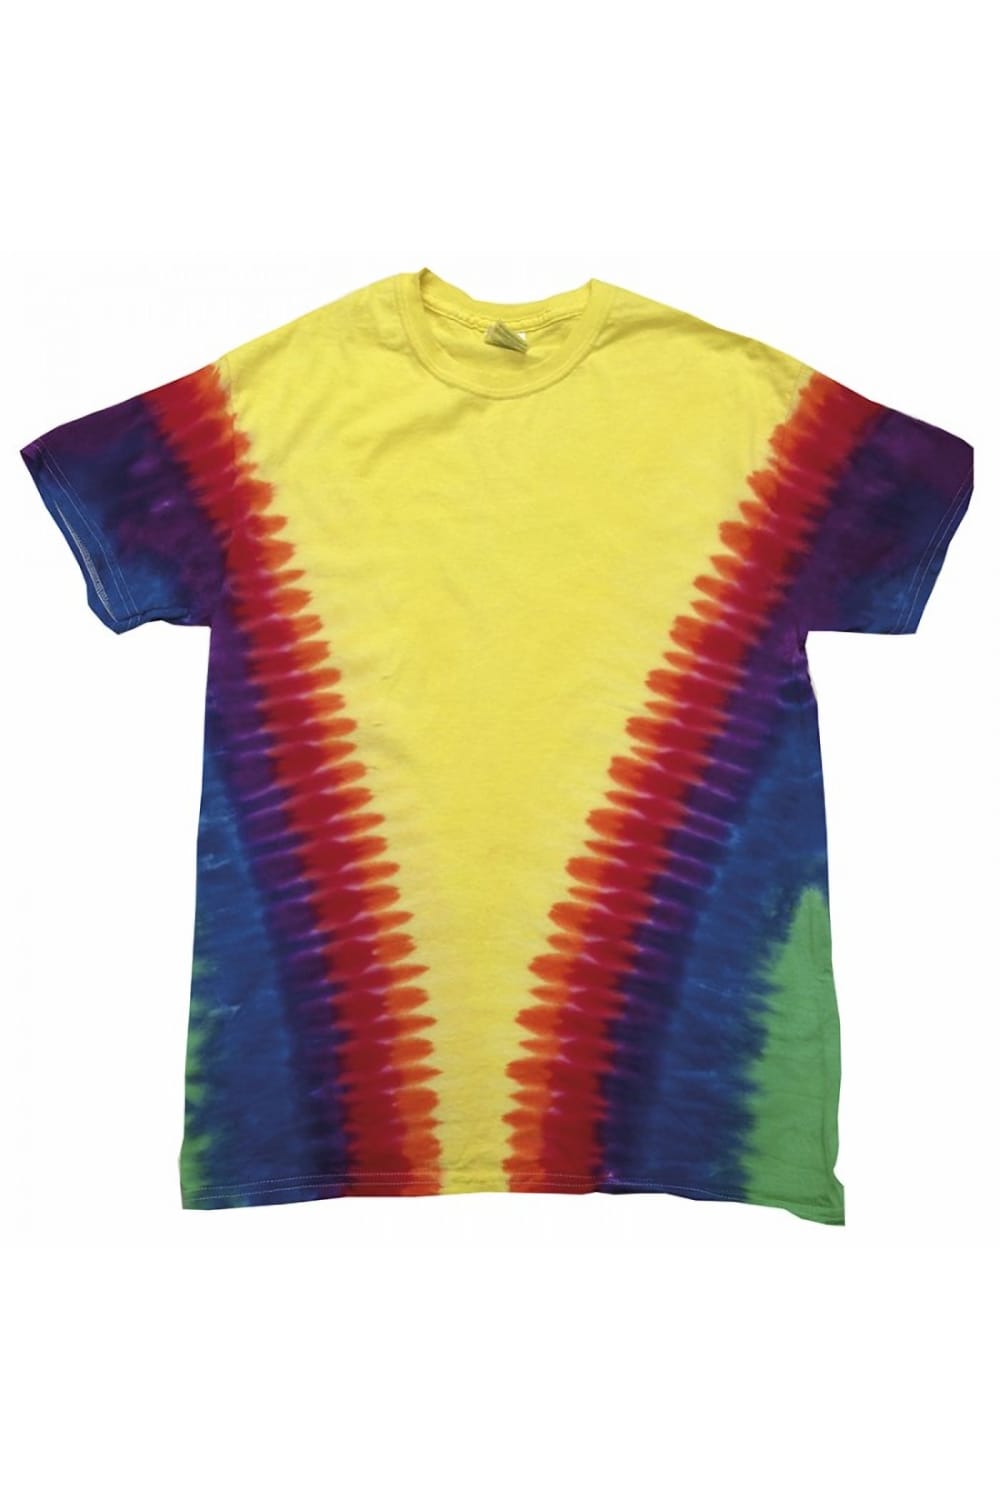 Childrens/Kids Little Boys Heavyweight Colorful T-Shirt - Rainbow Vee